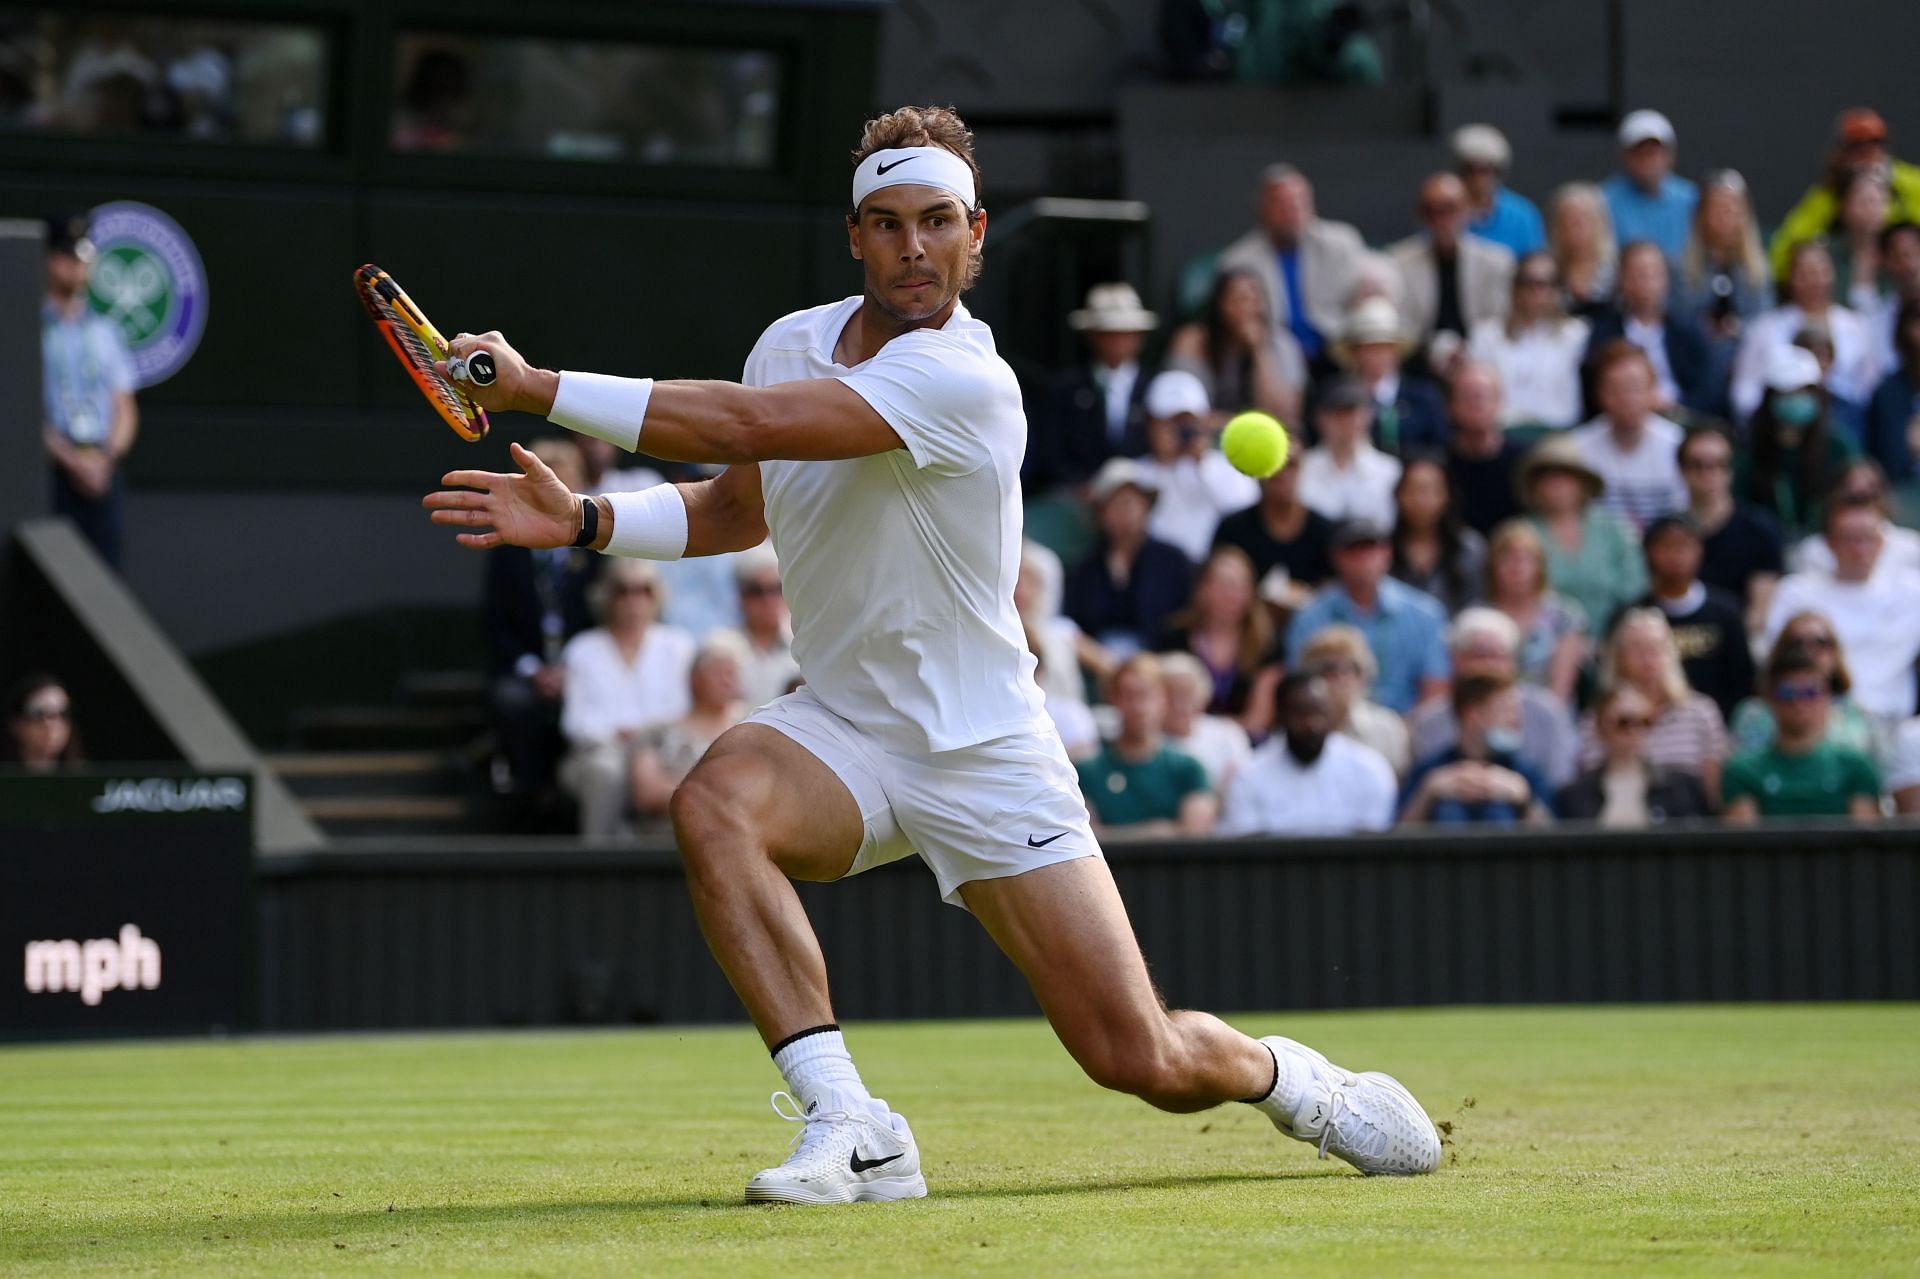 Wimbledon 2022 Rafael Nadal next match Opponent, venue, live